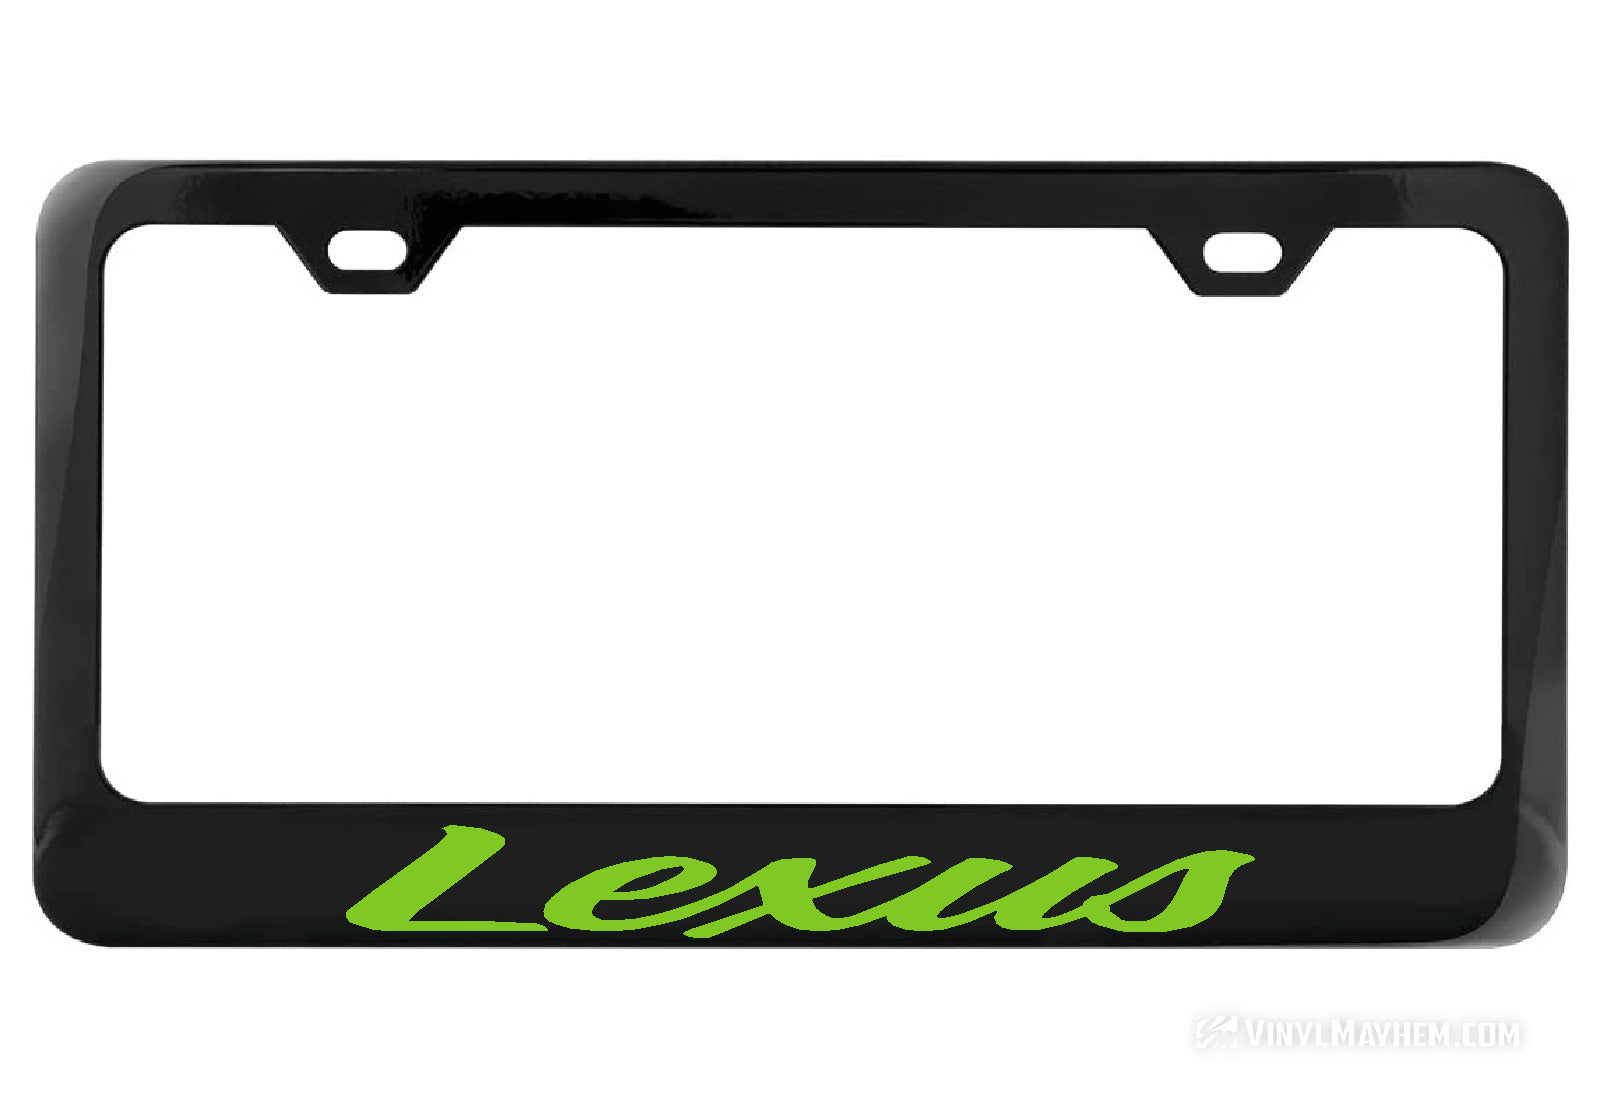 Lexus black license plate frame